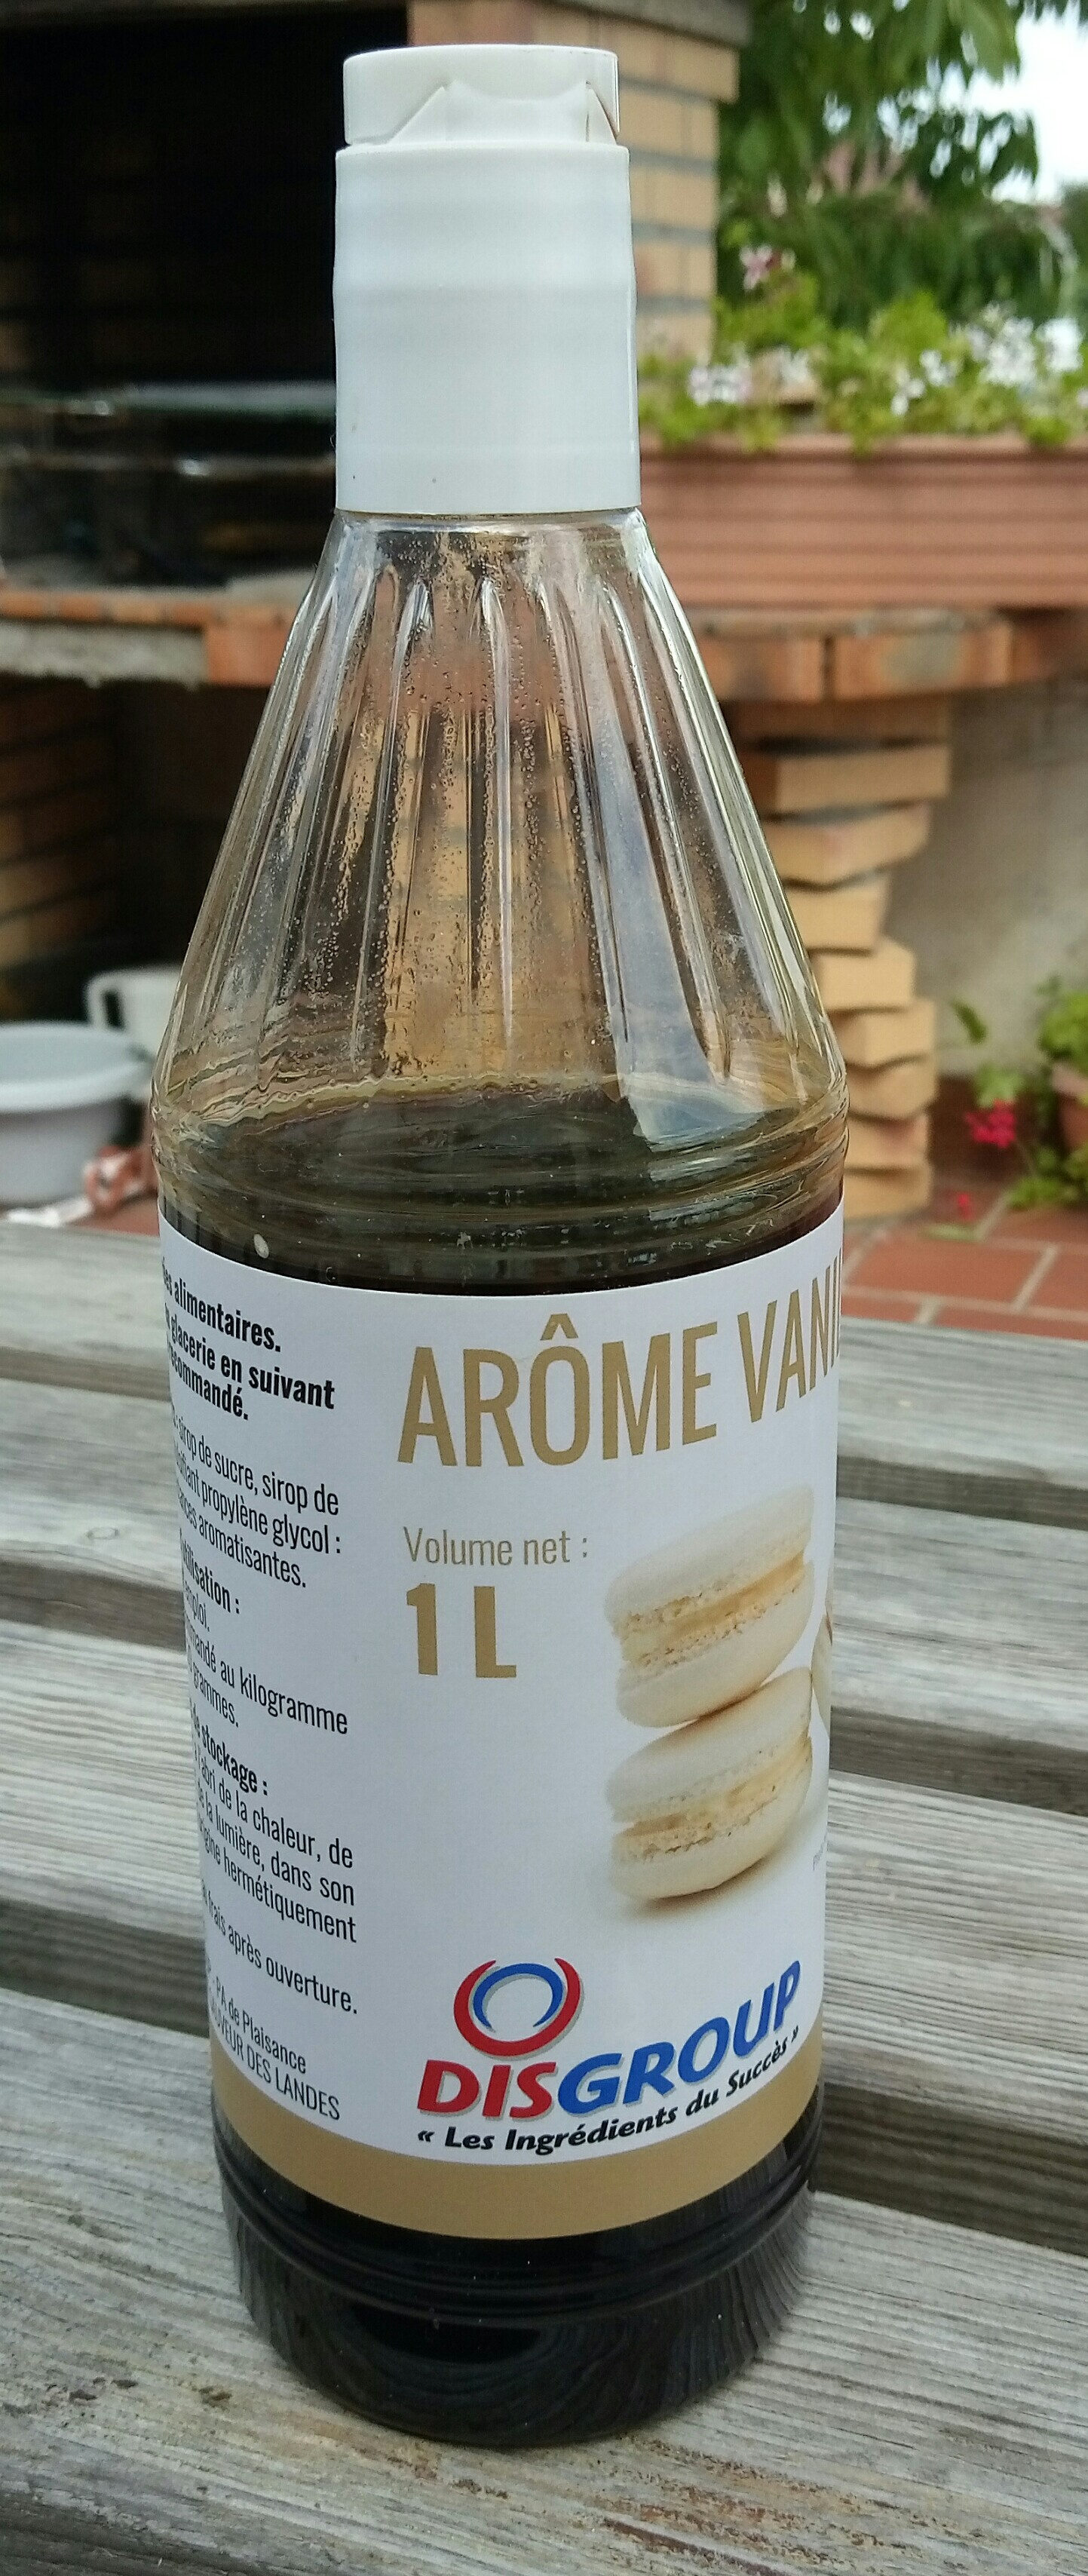 Arôme vanille - Produit